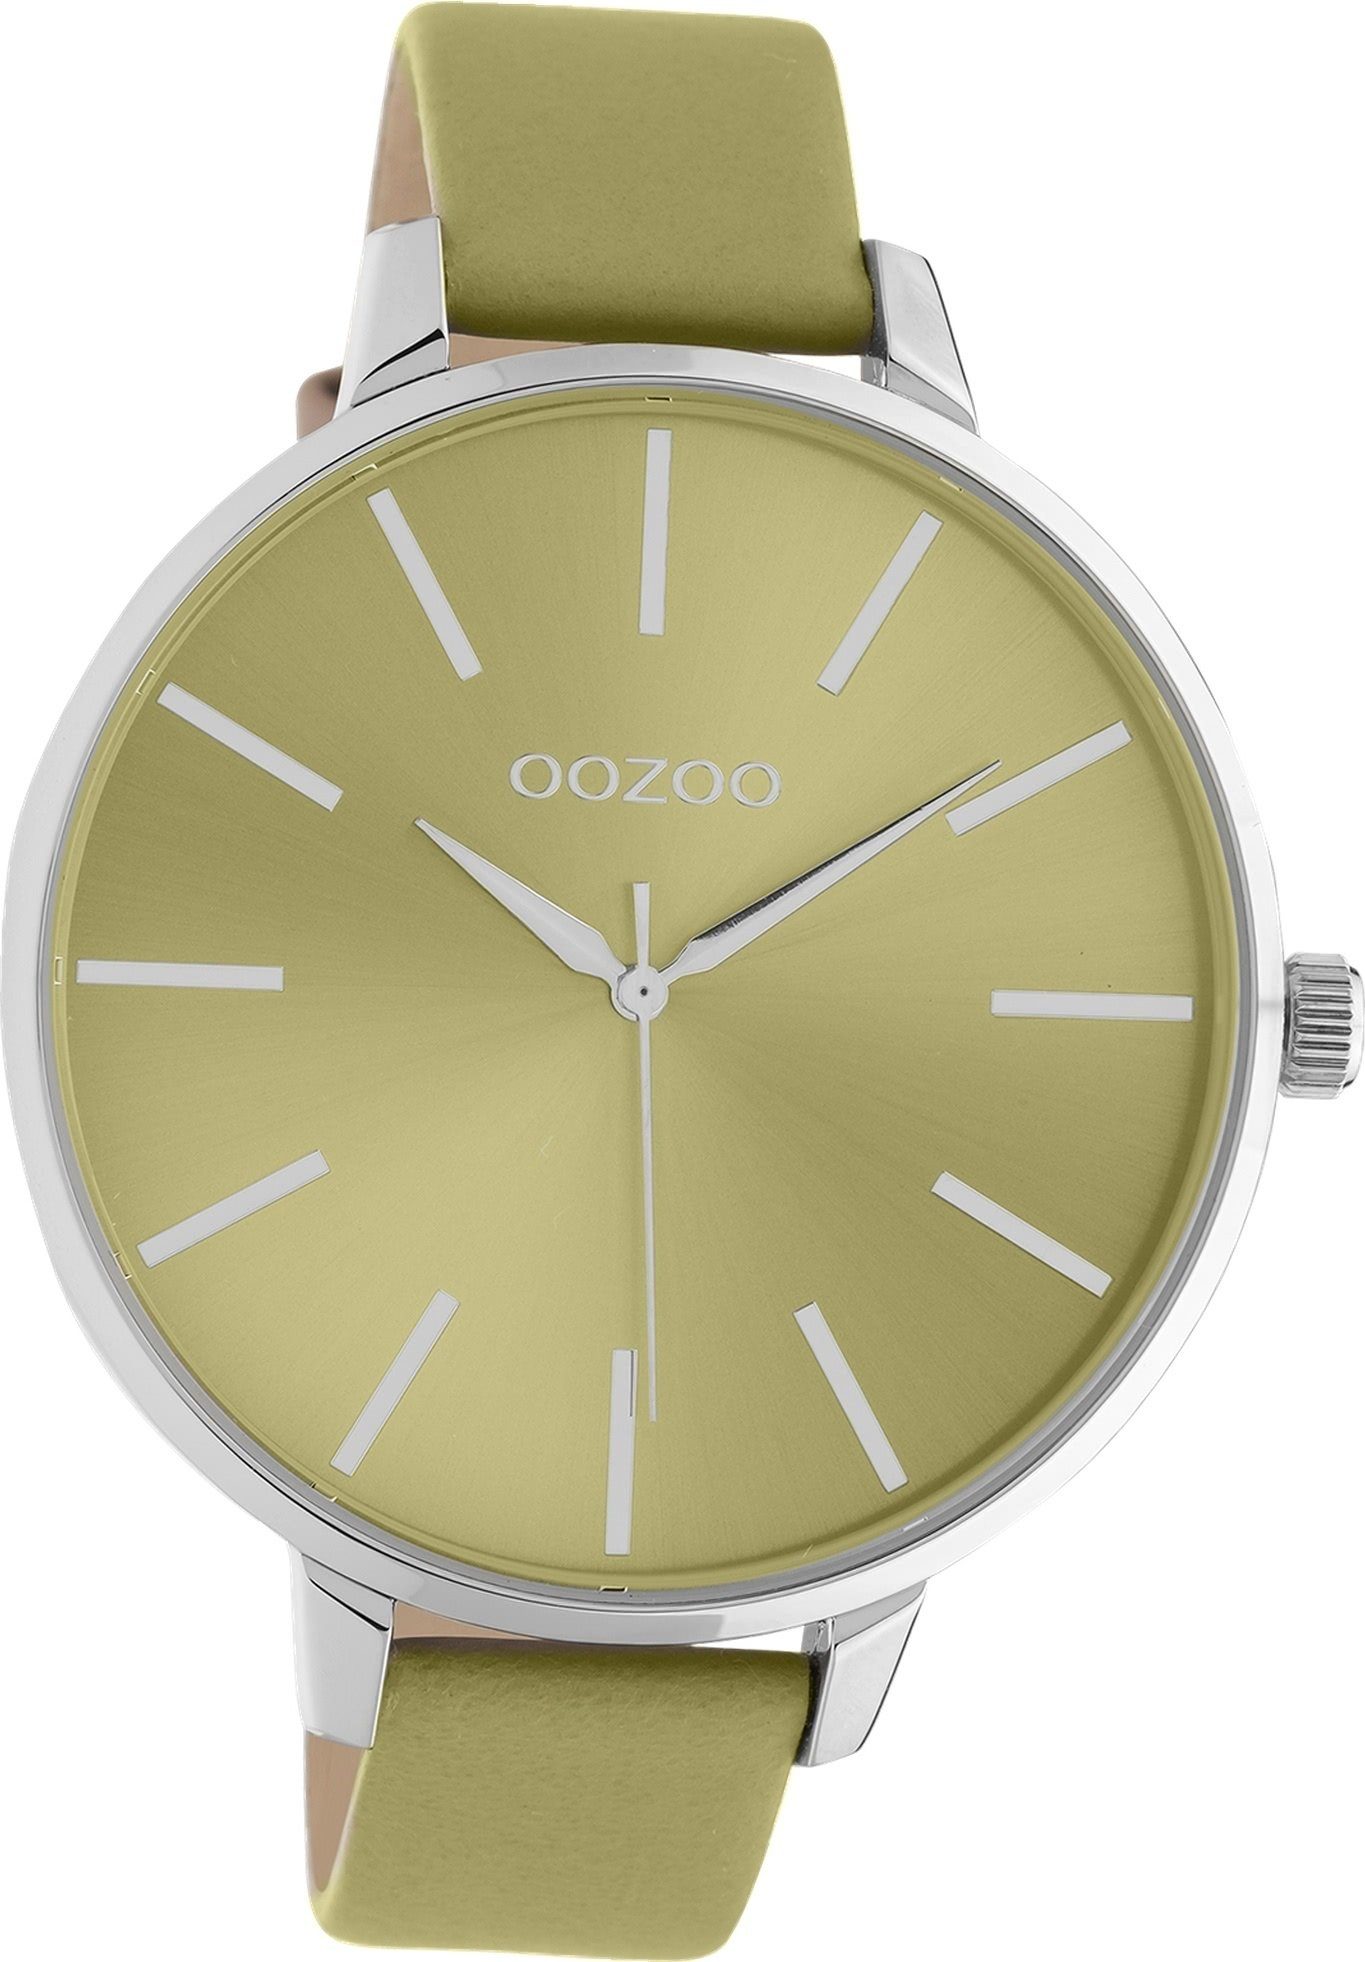 OOZOO Quarzuhr Oozoo Damen Armbanduhr Timepieces, Damenuhr Lederarmband ockergelb, rundes Gehäuse, extra groß (ca. 48mm)